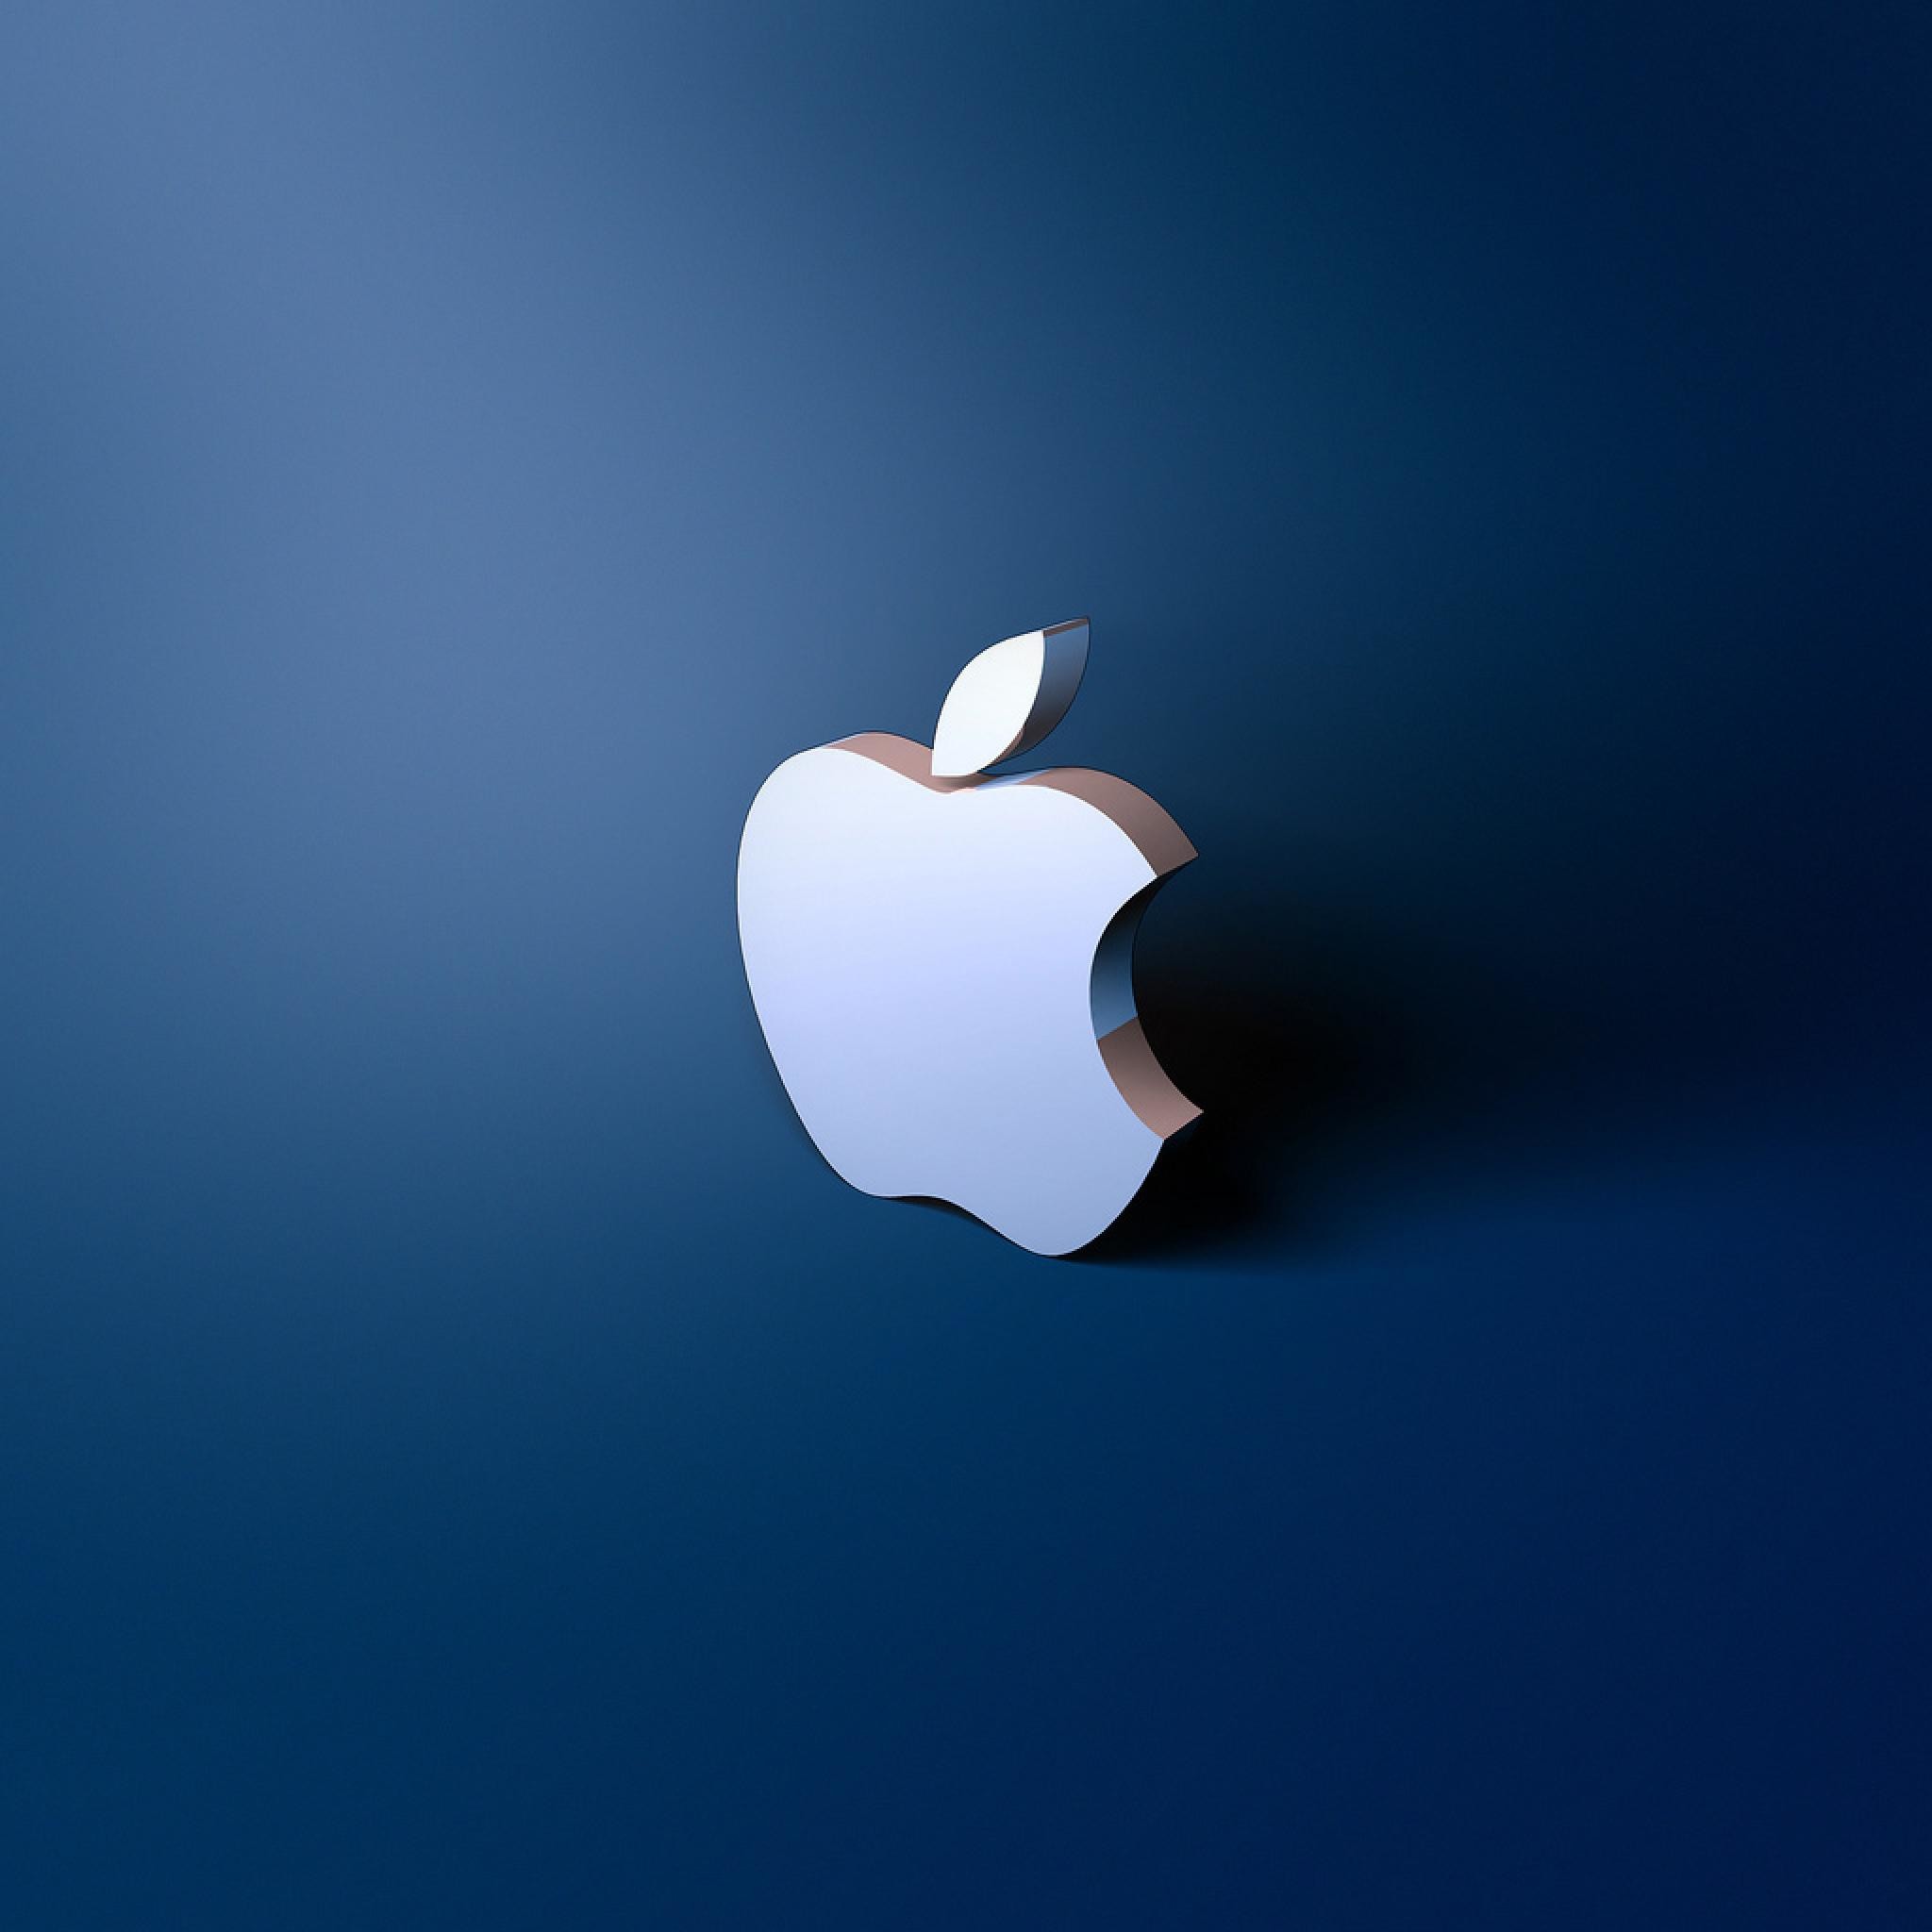 Blue metallic and shiny apple logo ipad iphone hd wallpaper